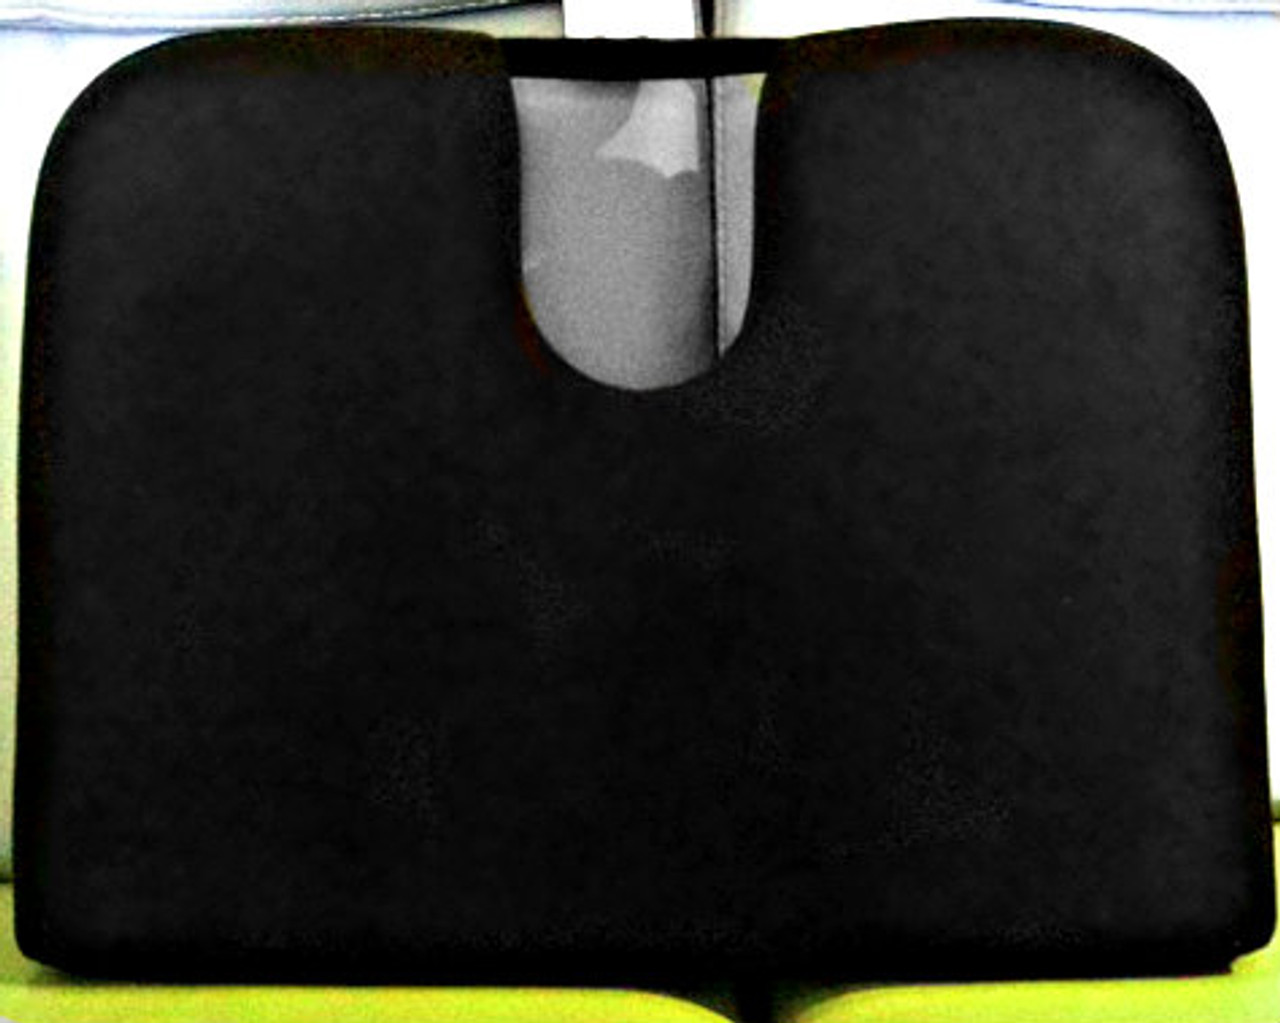 Extra Firm Original Tush Cush Orthopedic Seat Cushion Relieves Pain